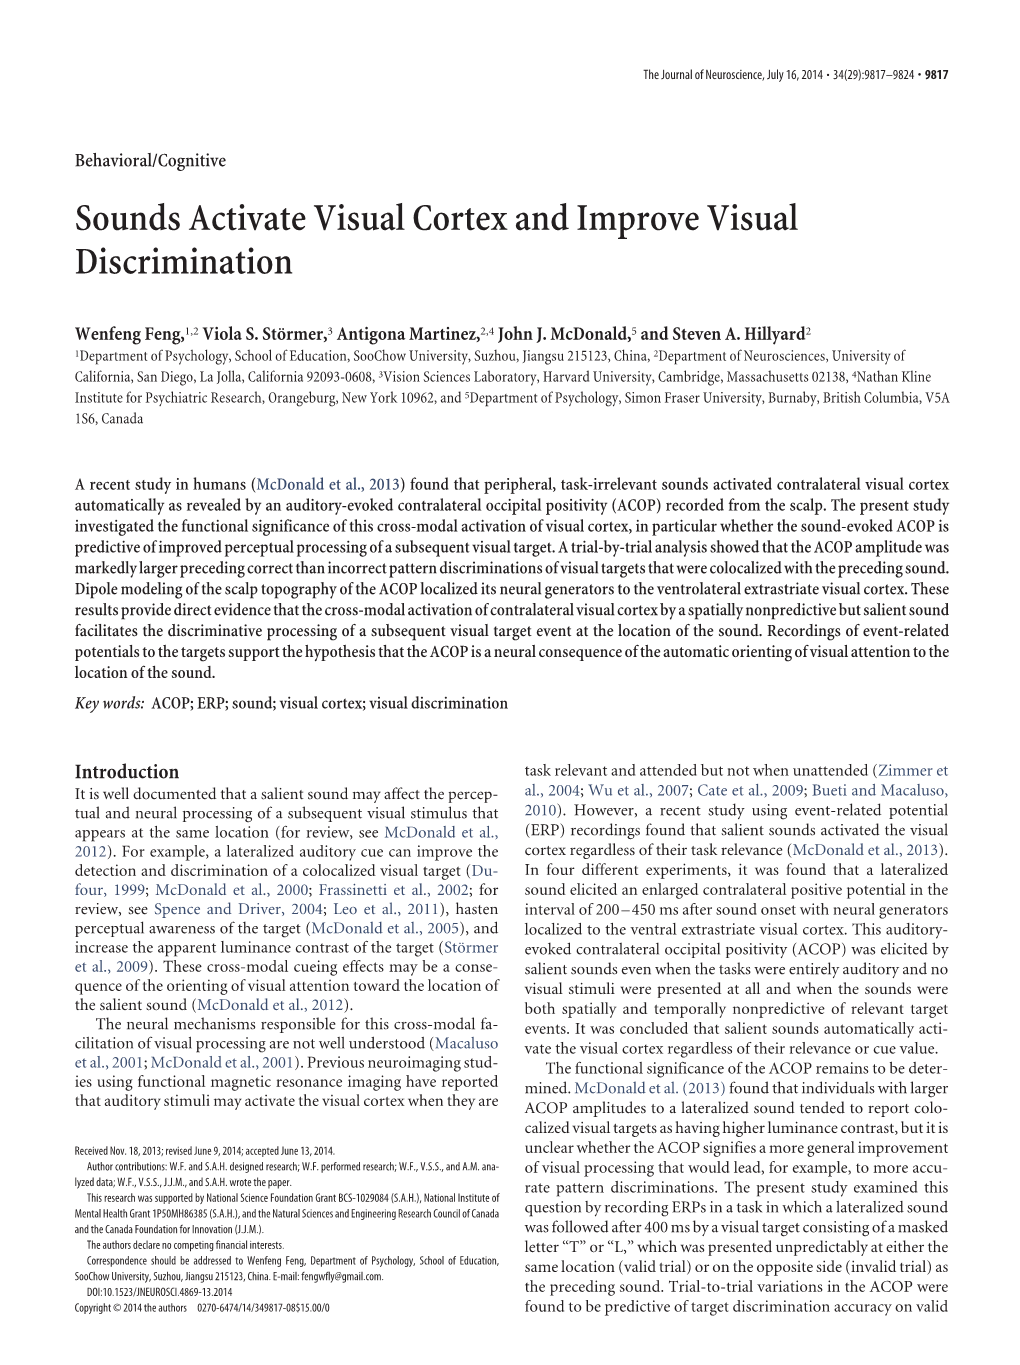 Sounds Activate Visual Cortex and Improve Visual Discrimination